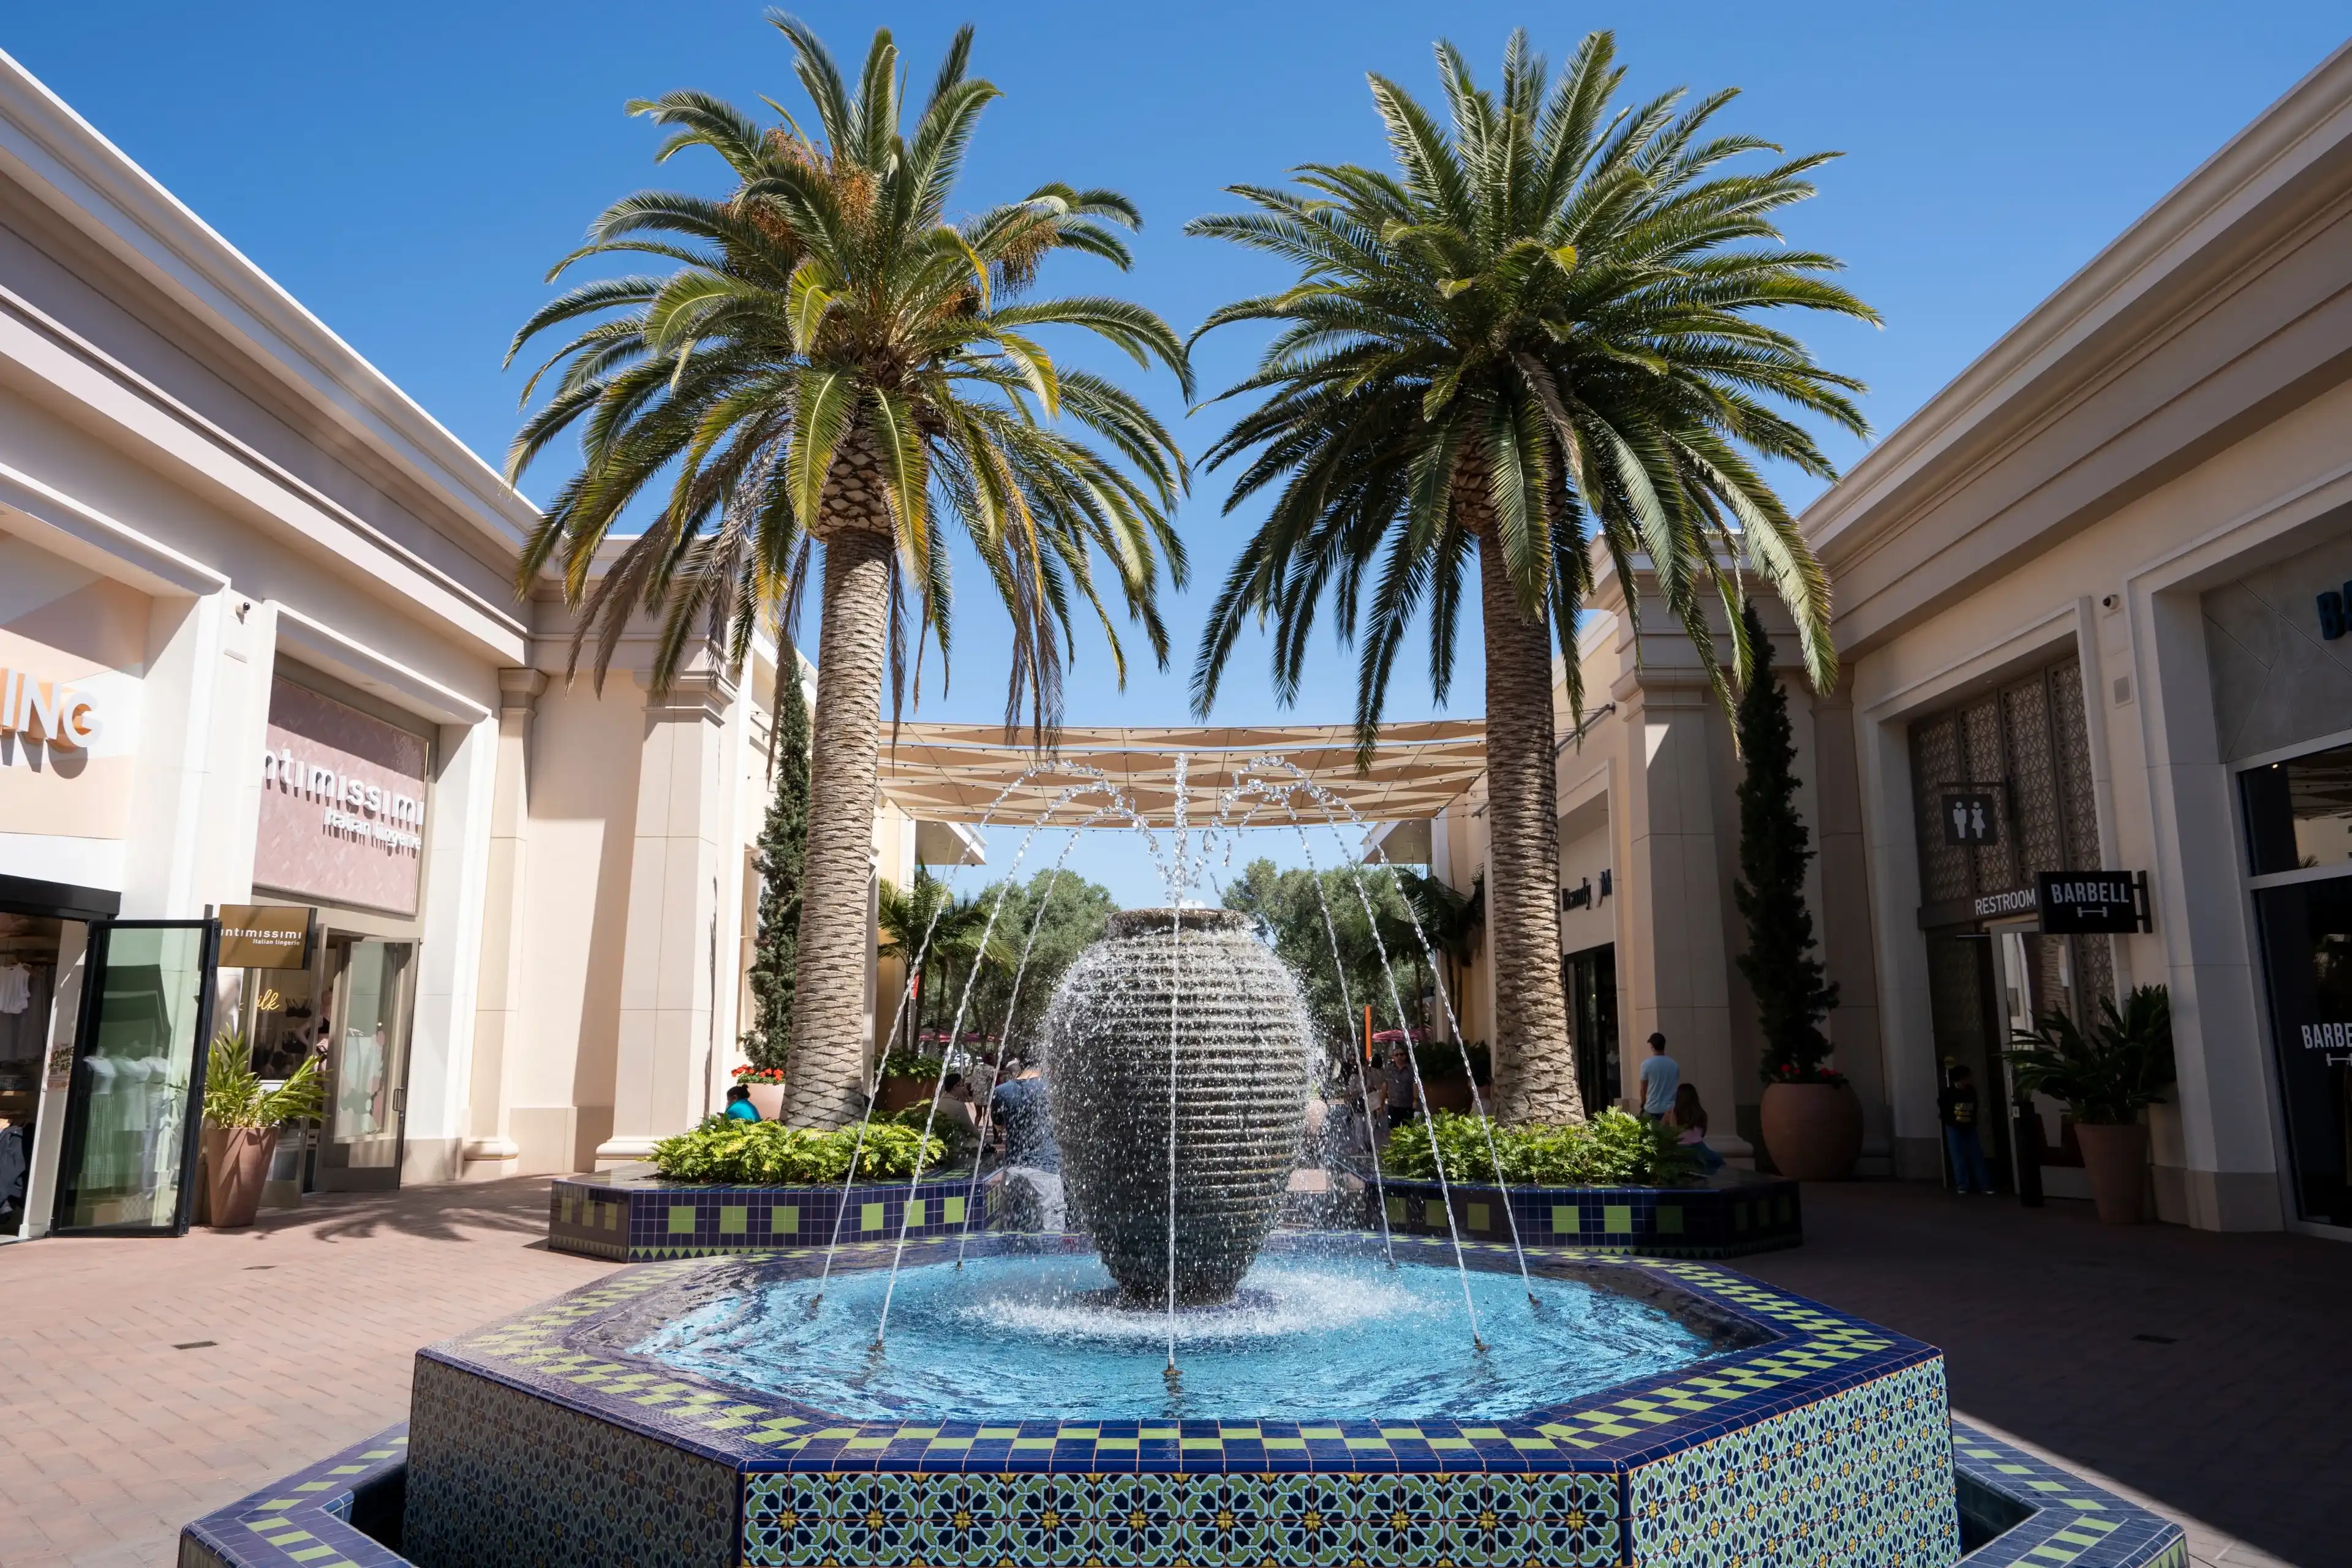 Best Irvine hotels. Cheap hotels in Irvine, California, United States